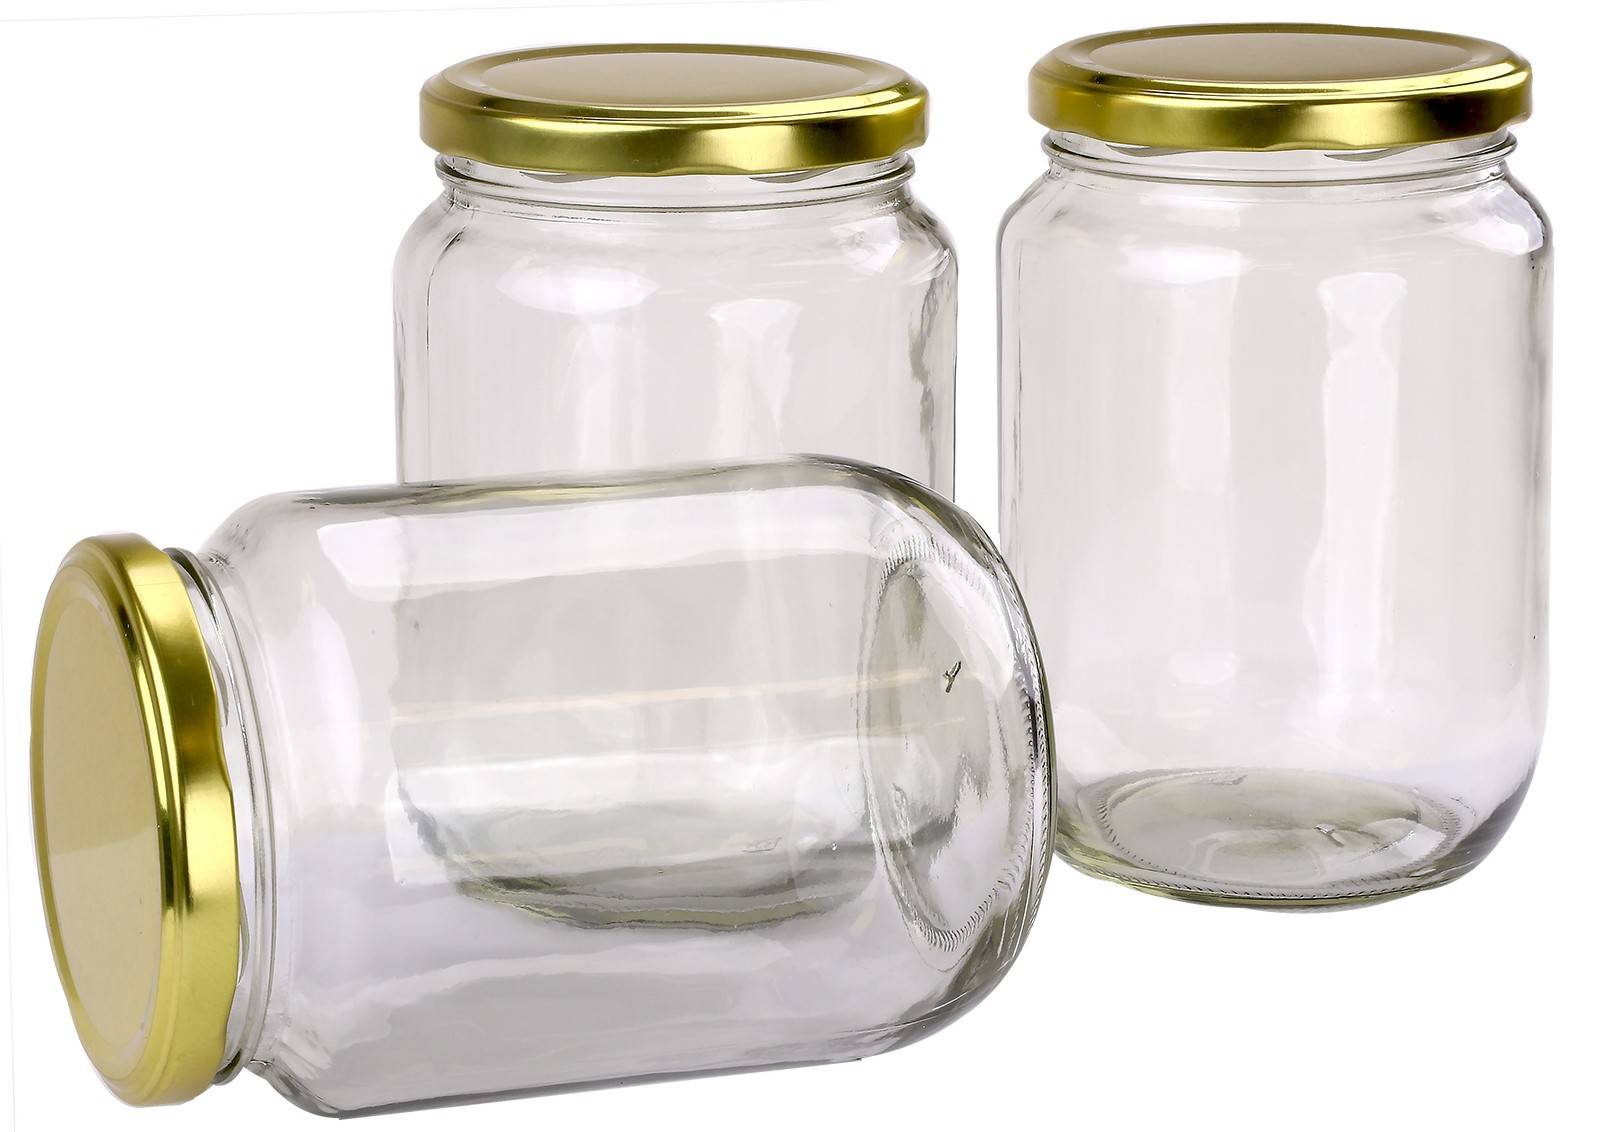 Download Carton 18 pcs Honey Jars - 500gm size - Hexagonal Glass ...